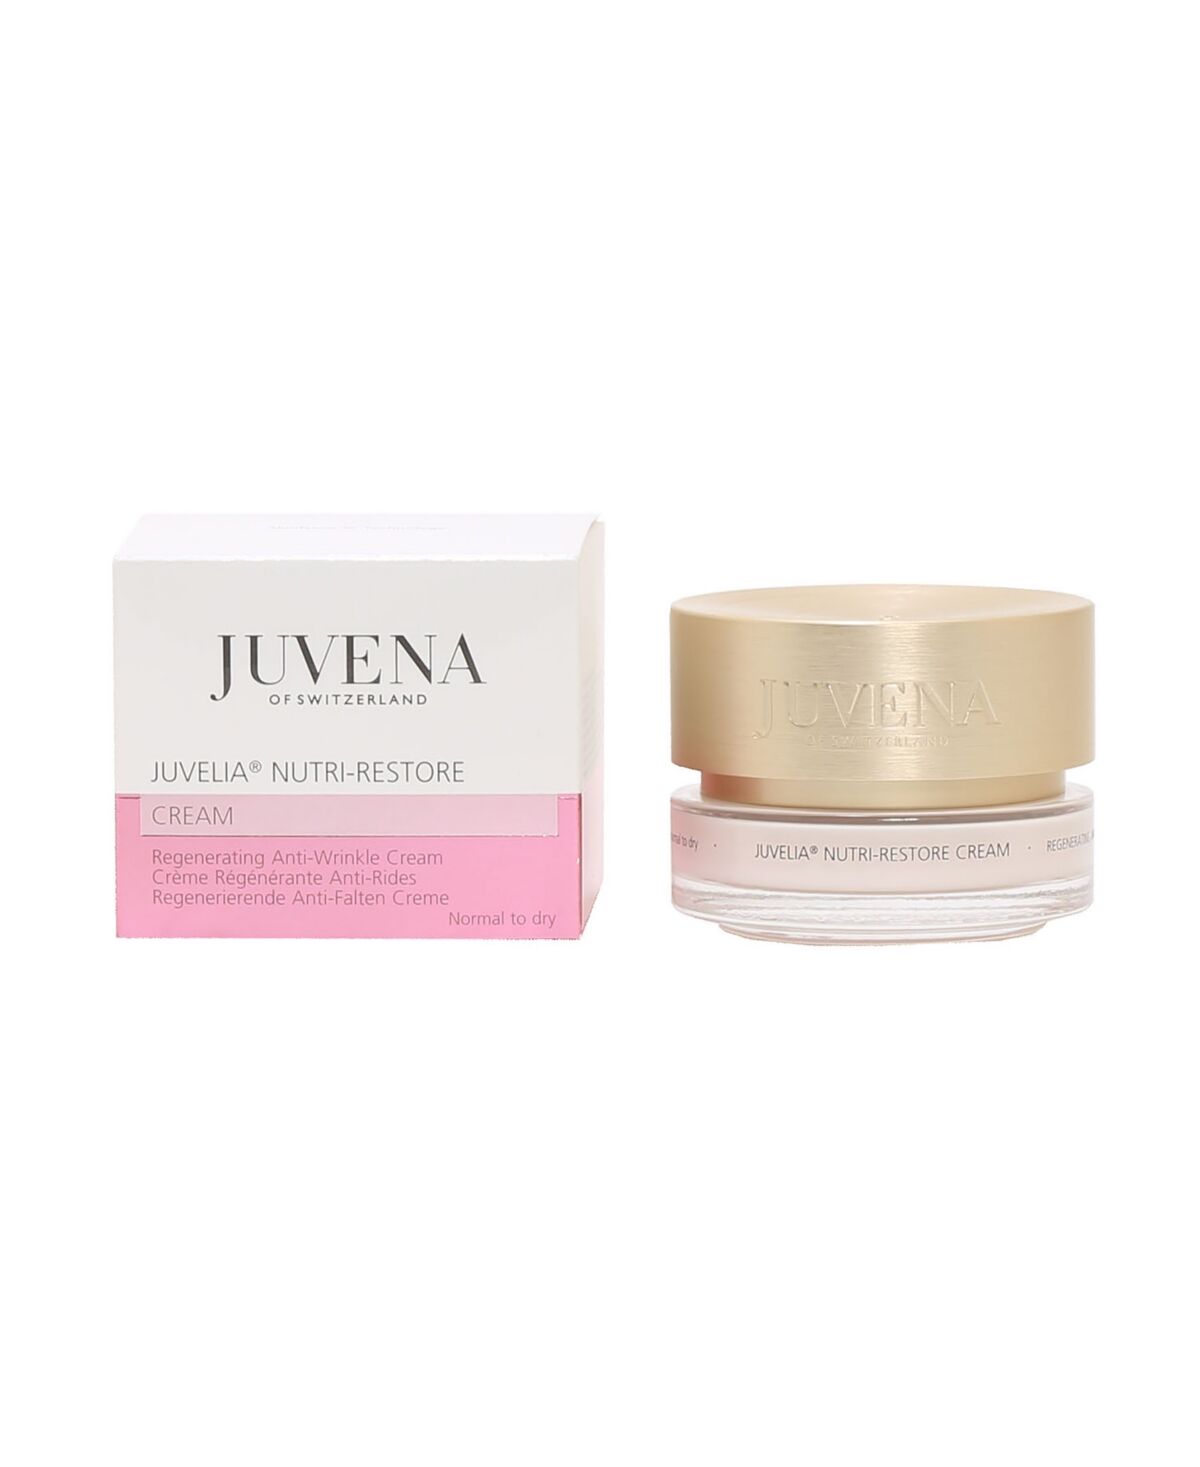 Juvena Skin Energy Nutri-Restore Cream Jar, 1.7 oz.